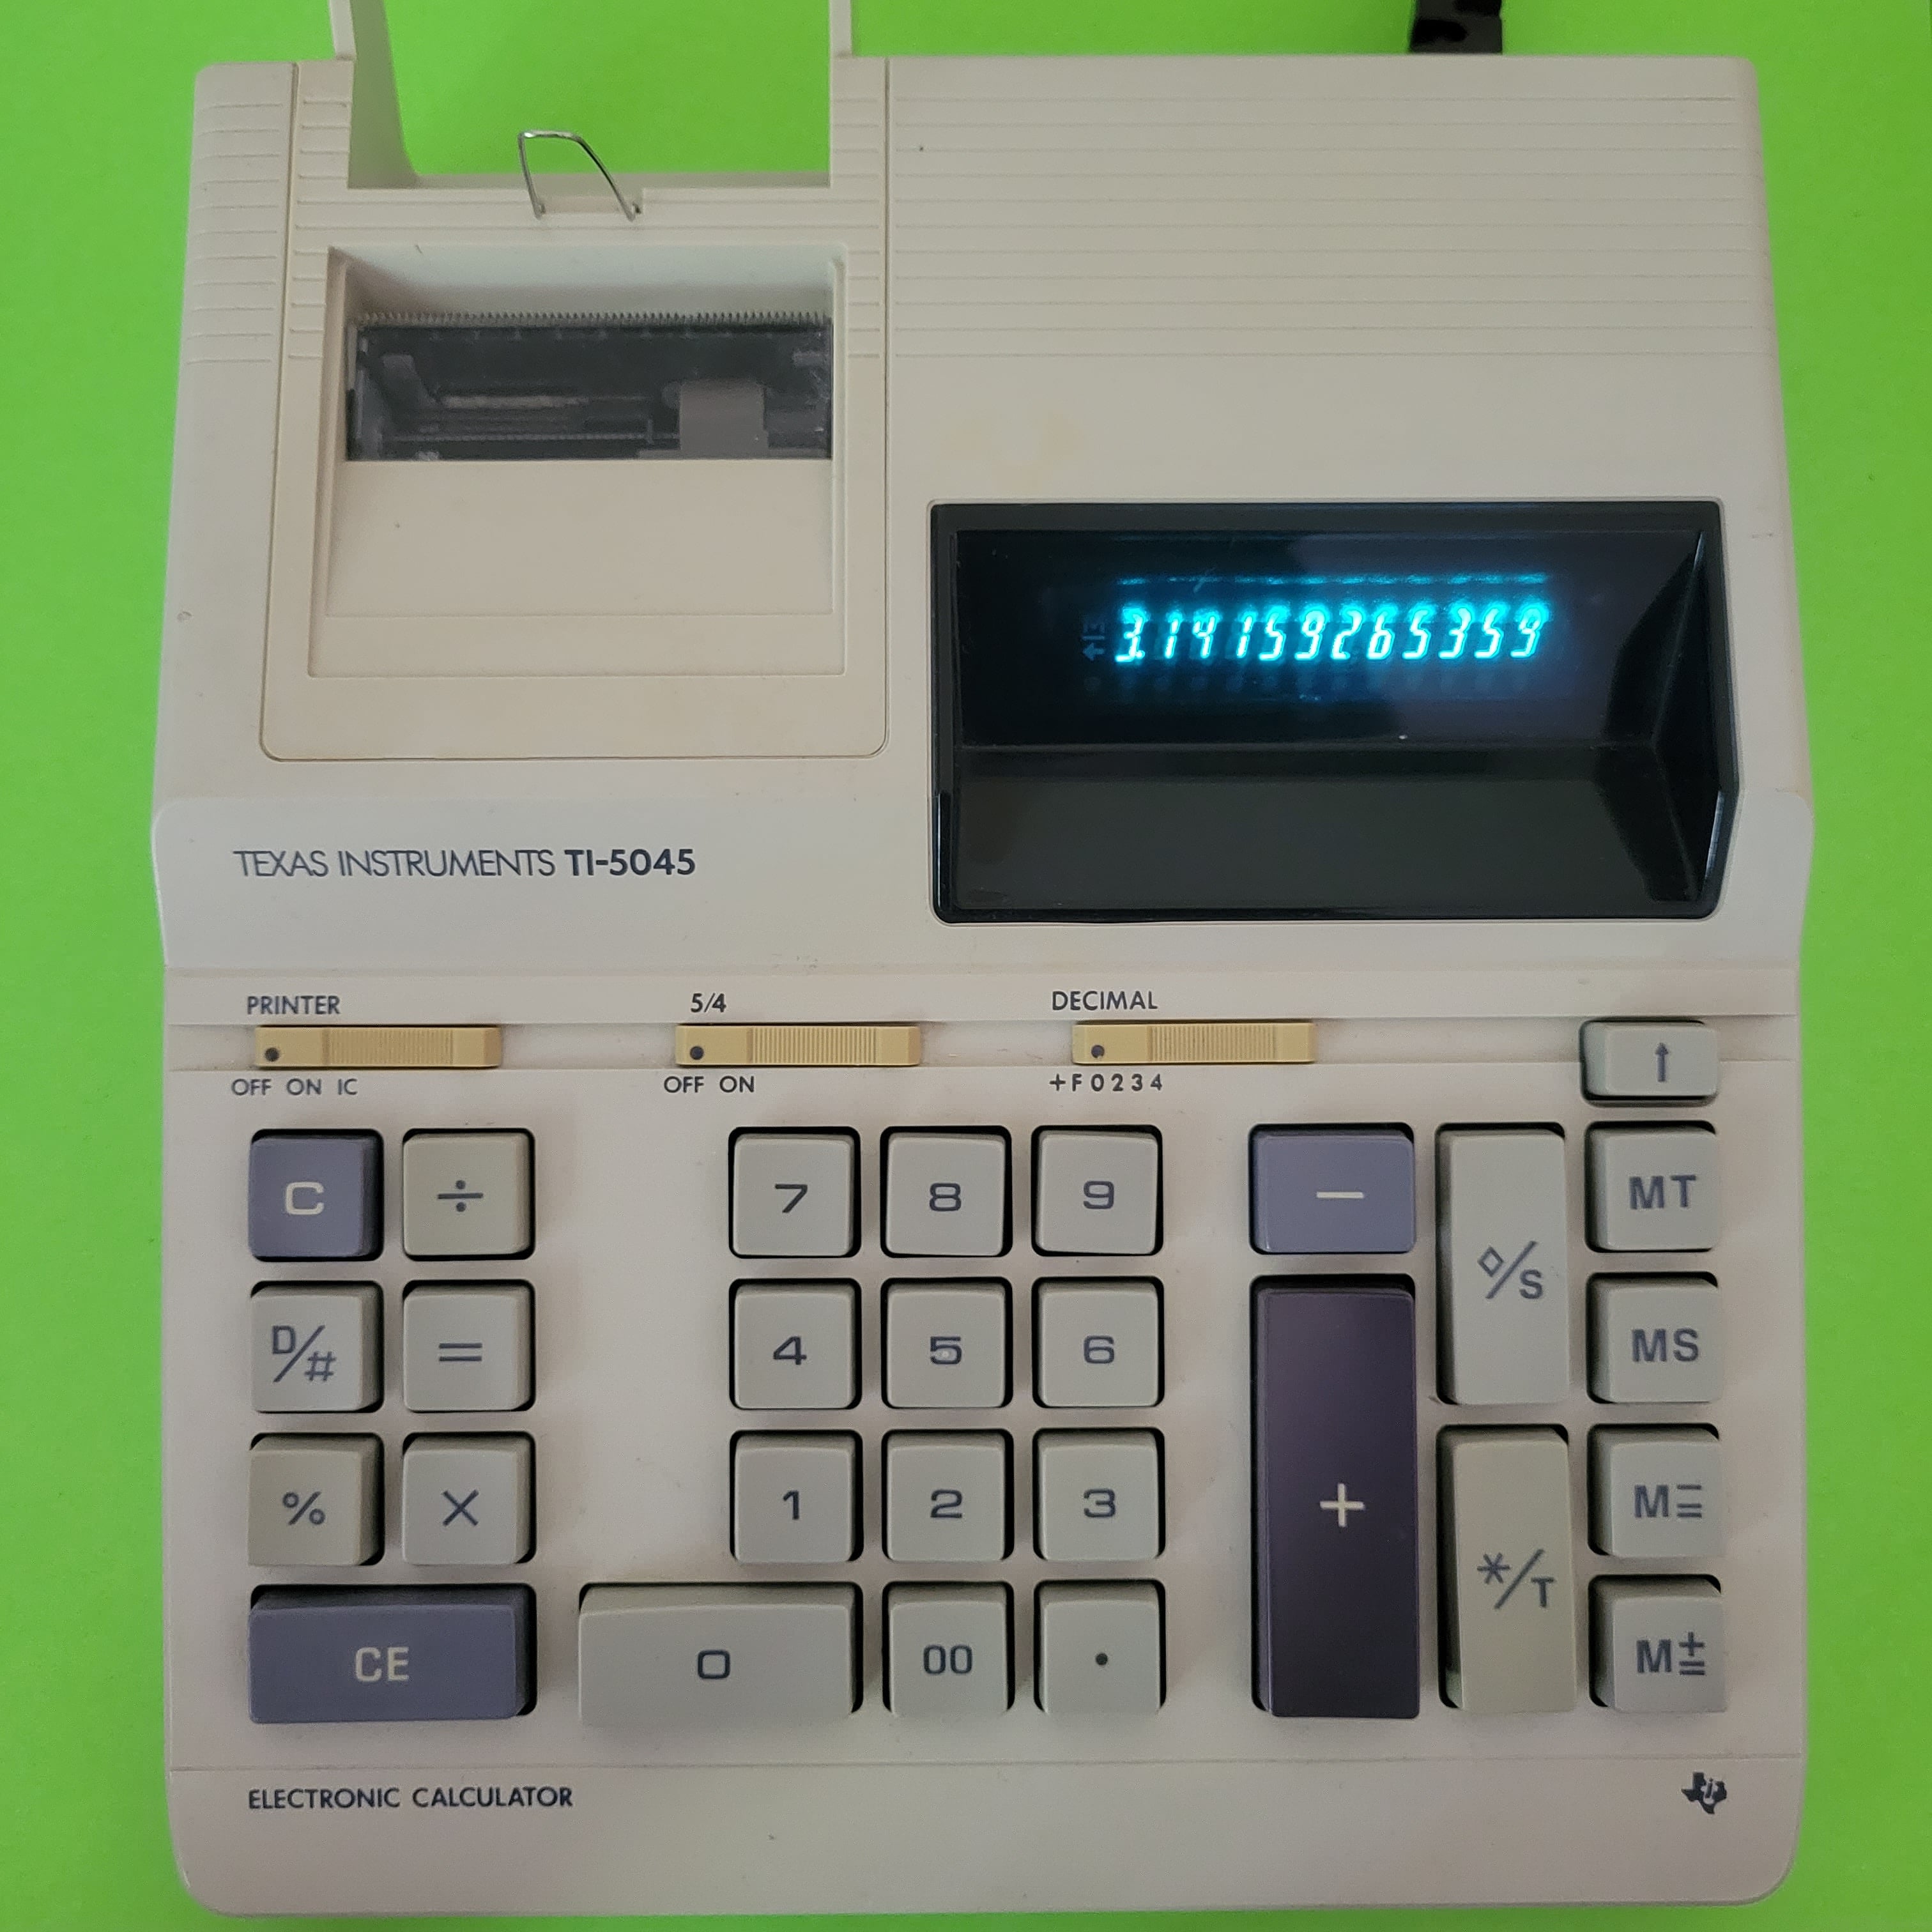 an image of a texas instruments ti-5045 desktop calculator